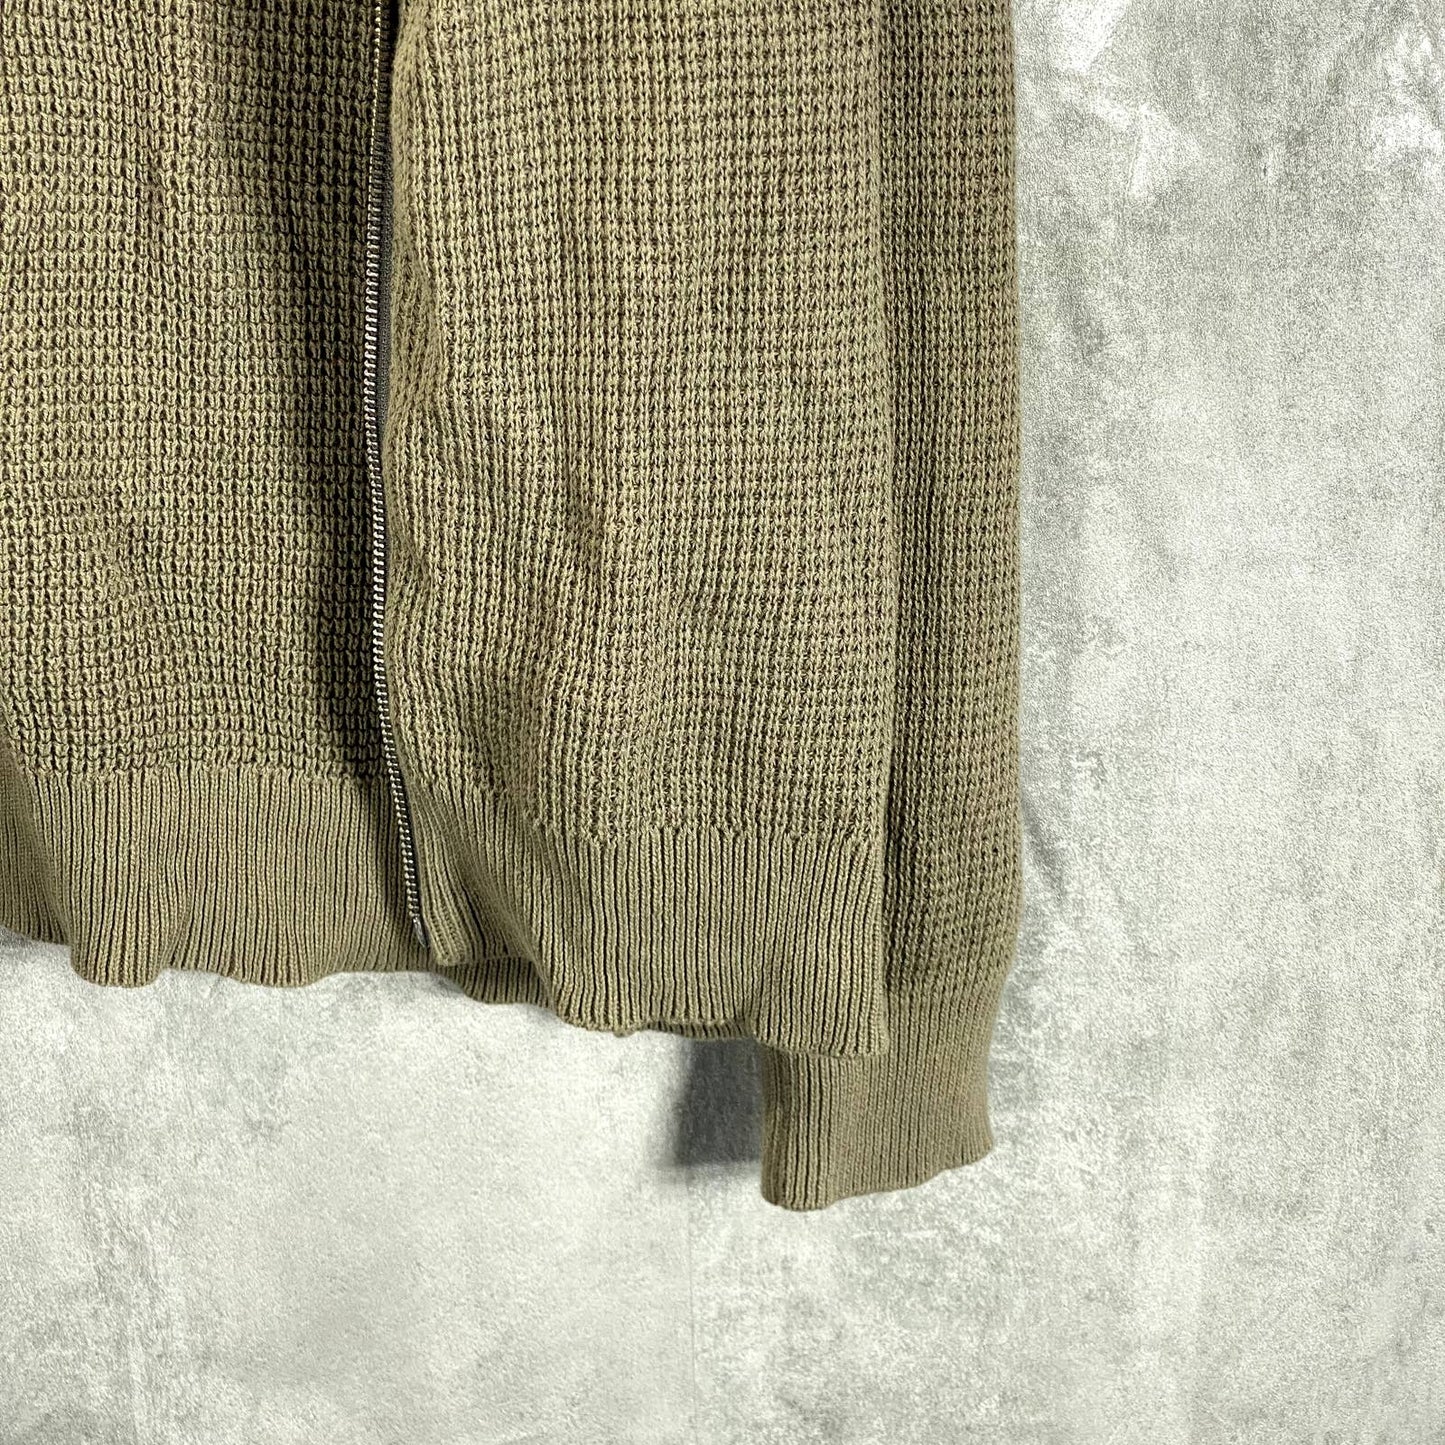 INC INTERNATIONAL Men's Green Tea Leaf Colorblocked Cotton Full-Zip Sweater SZ L